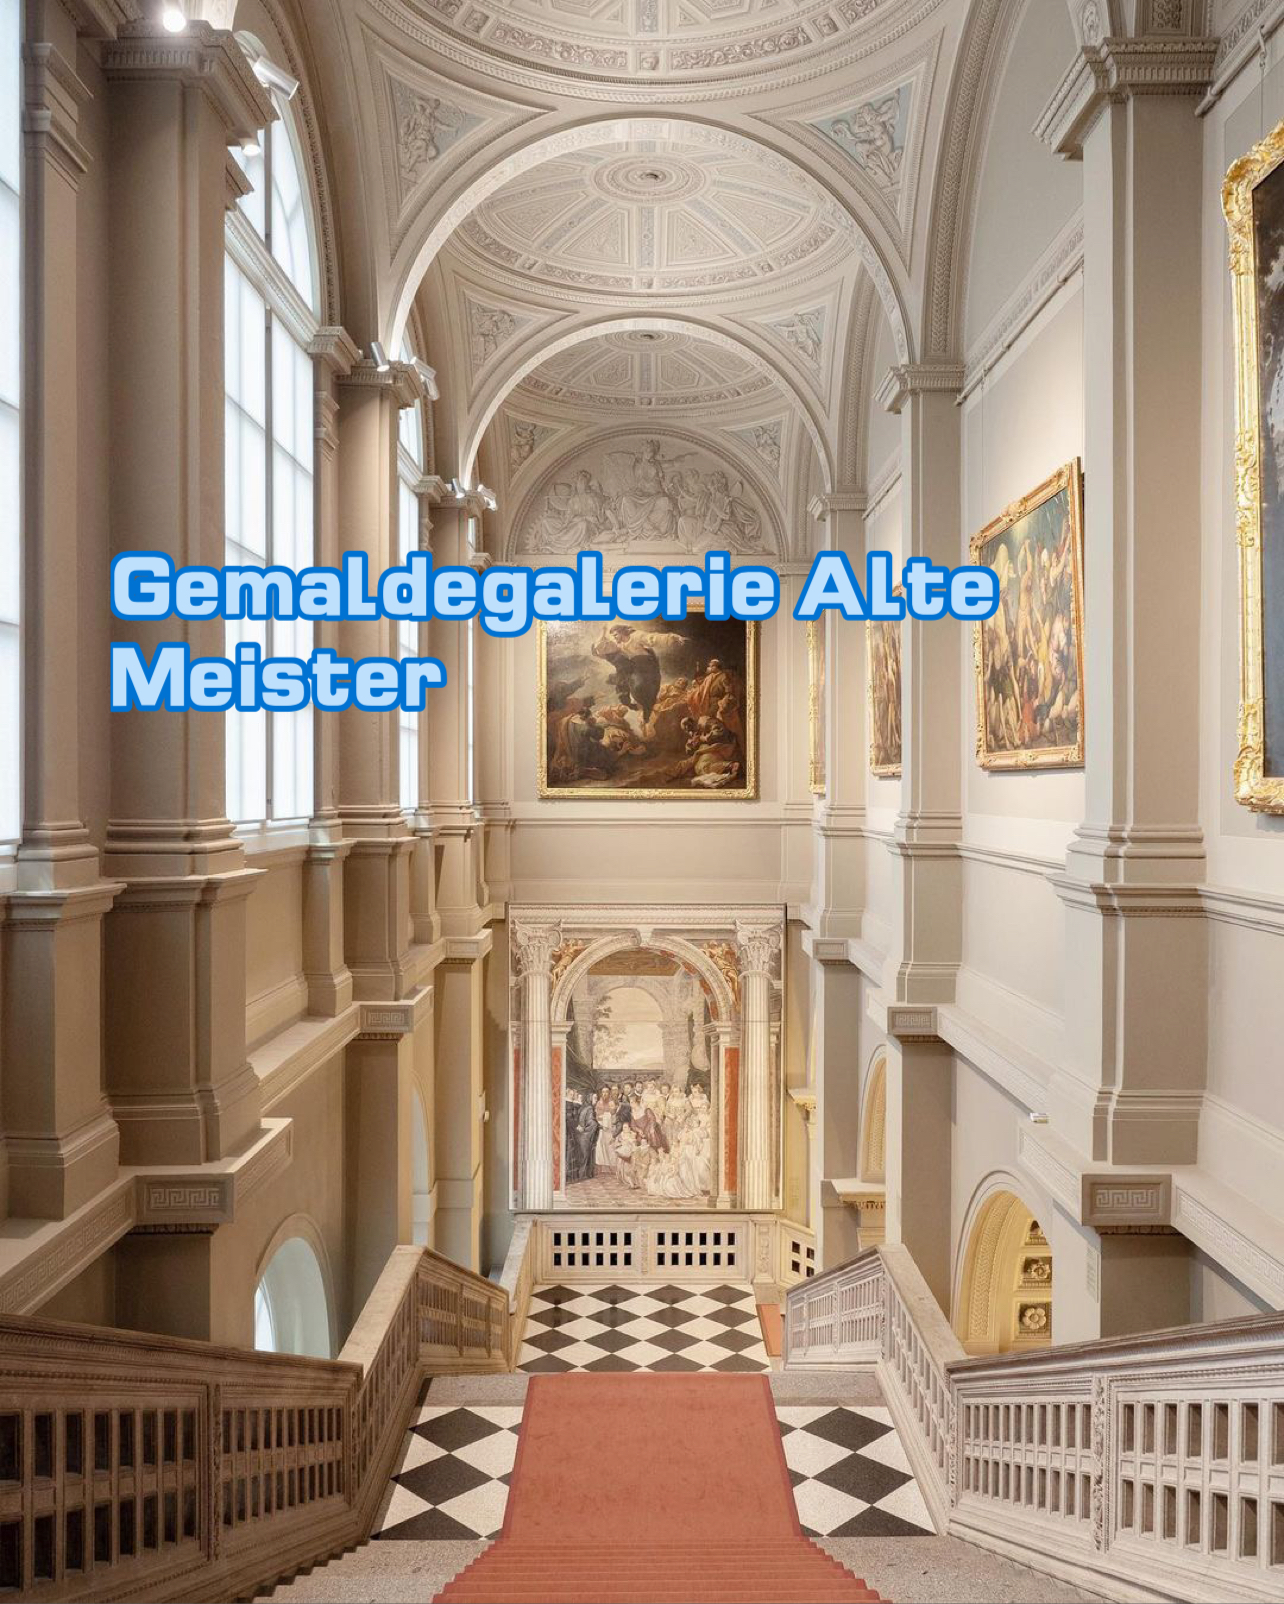 Gemaldegalerie Alte Meister